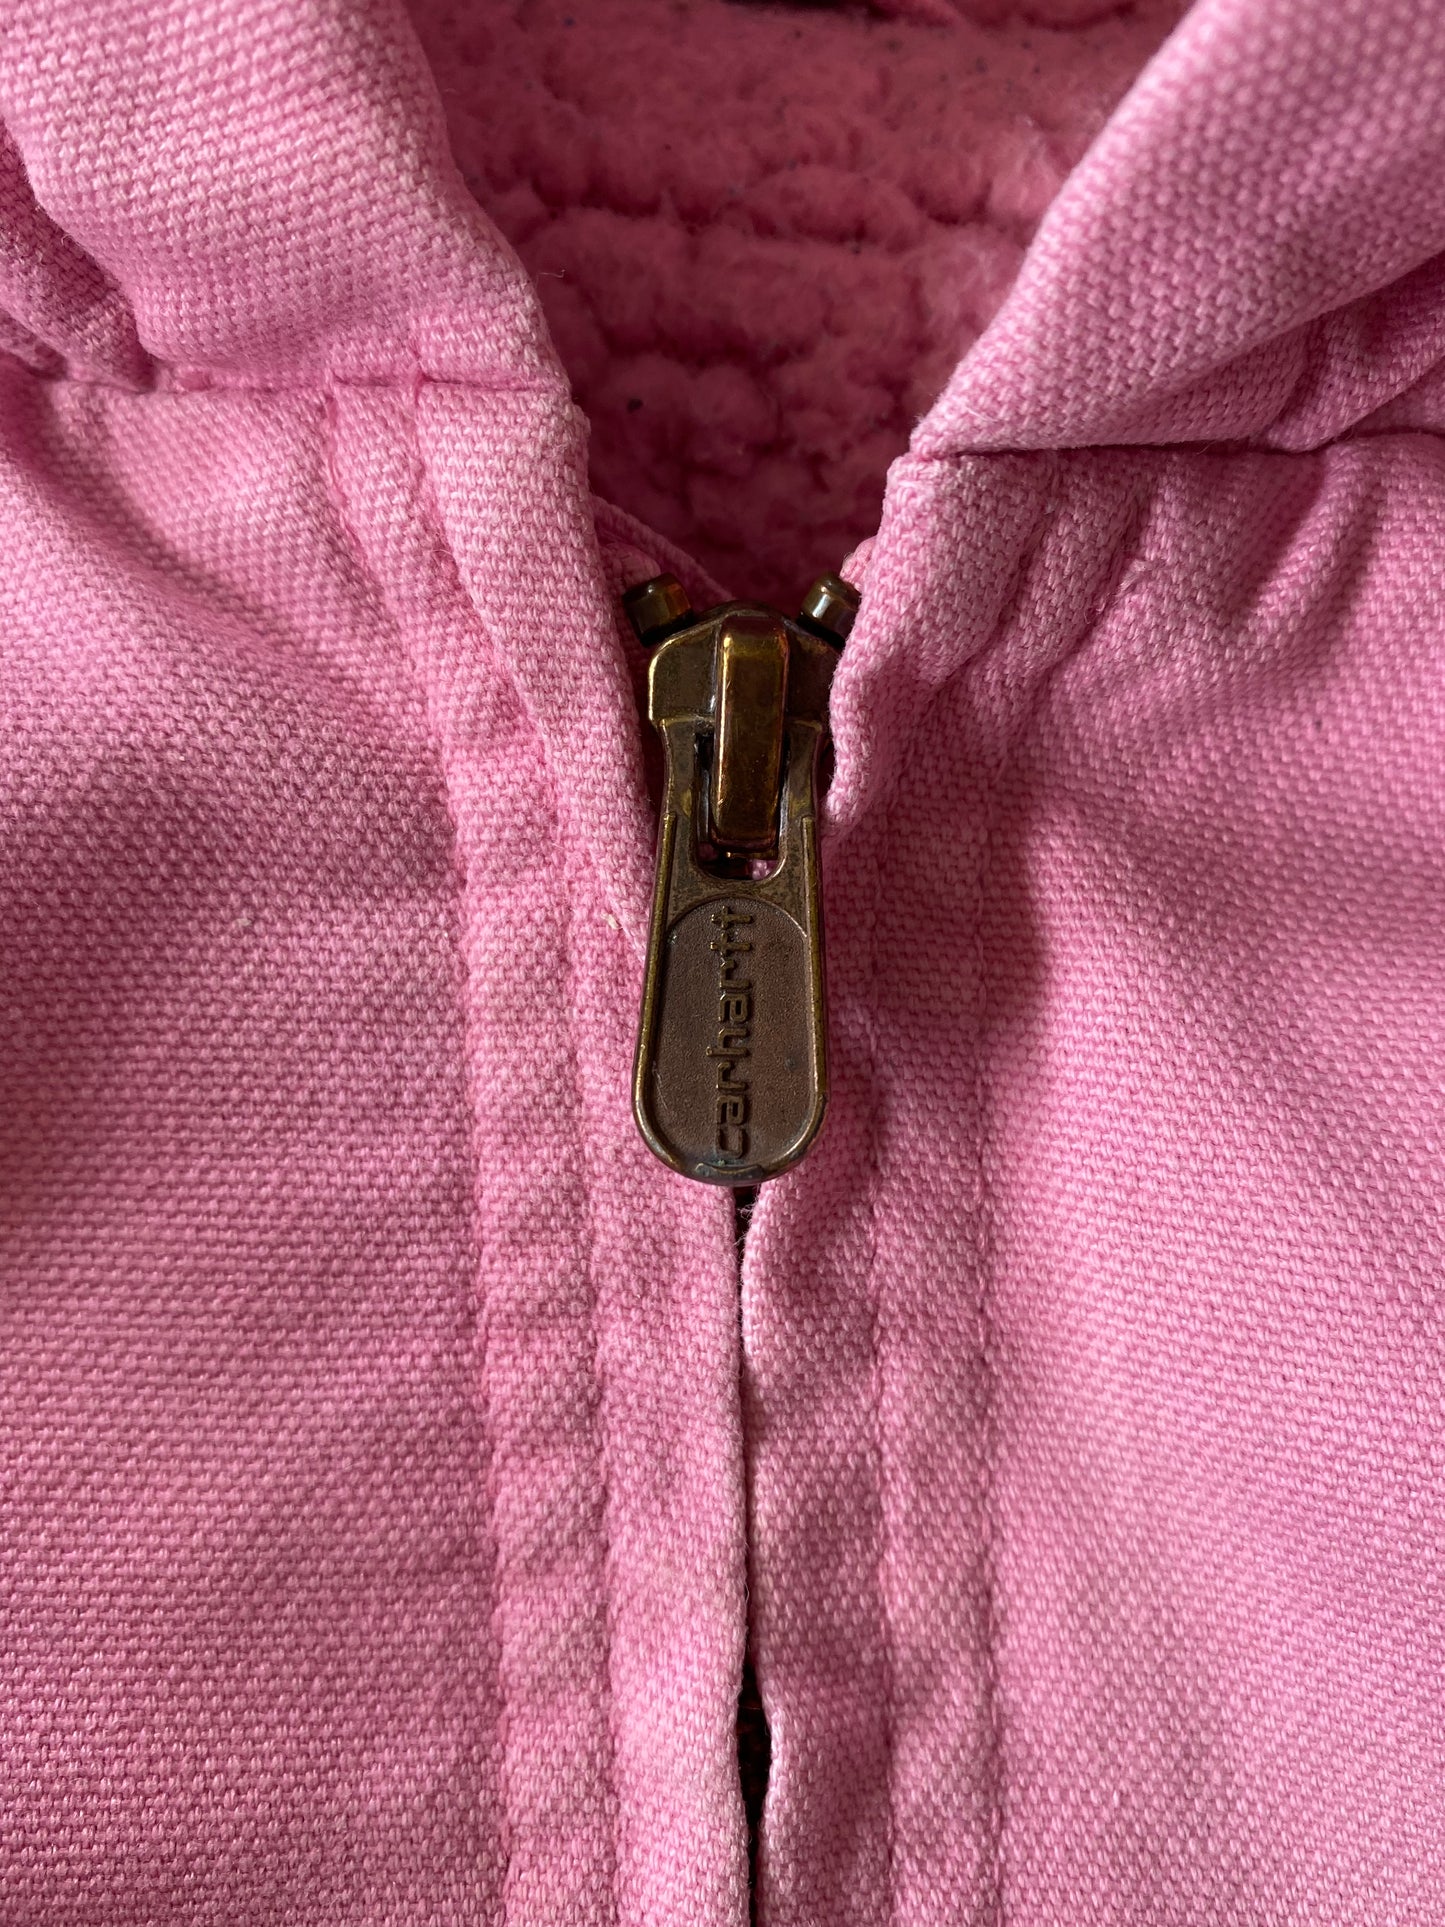 Carhartt Pink Active Jacket